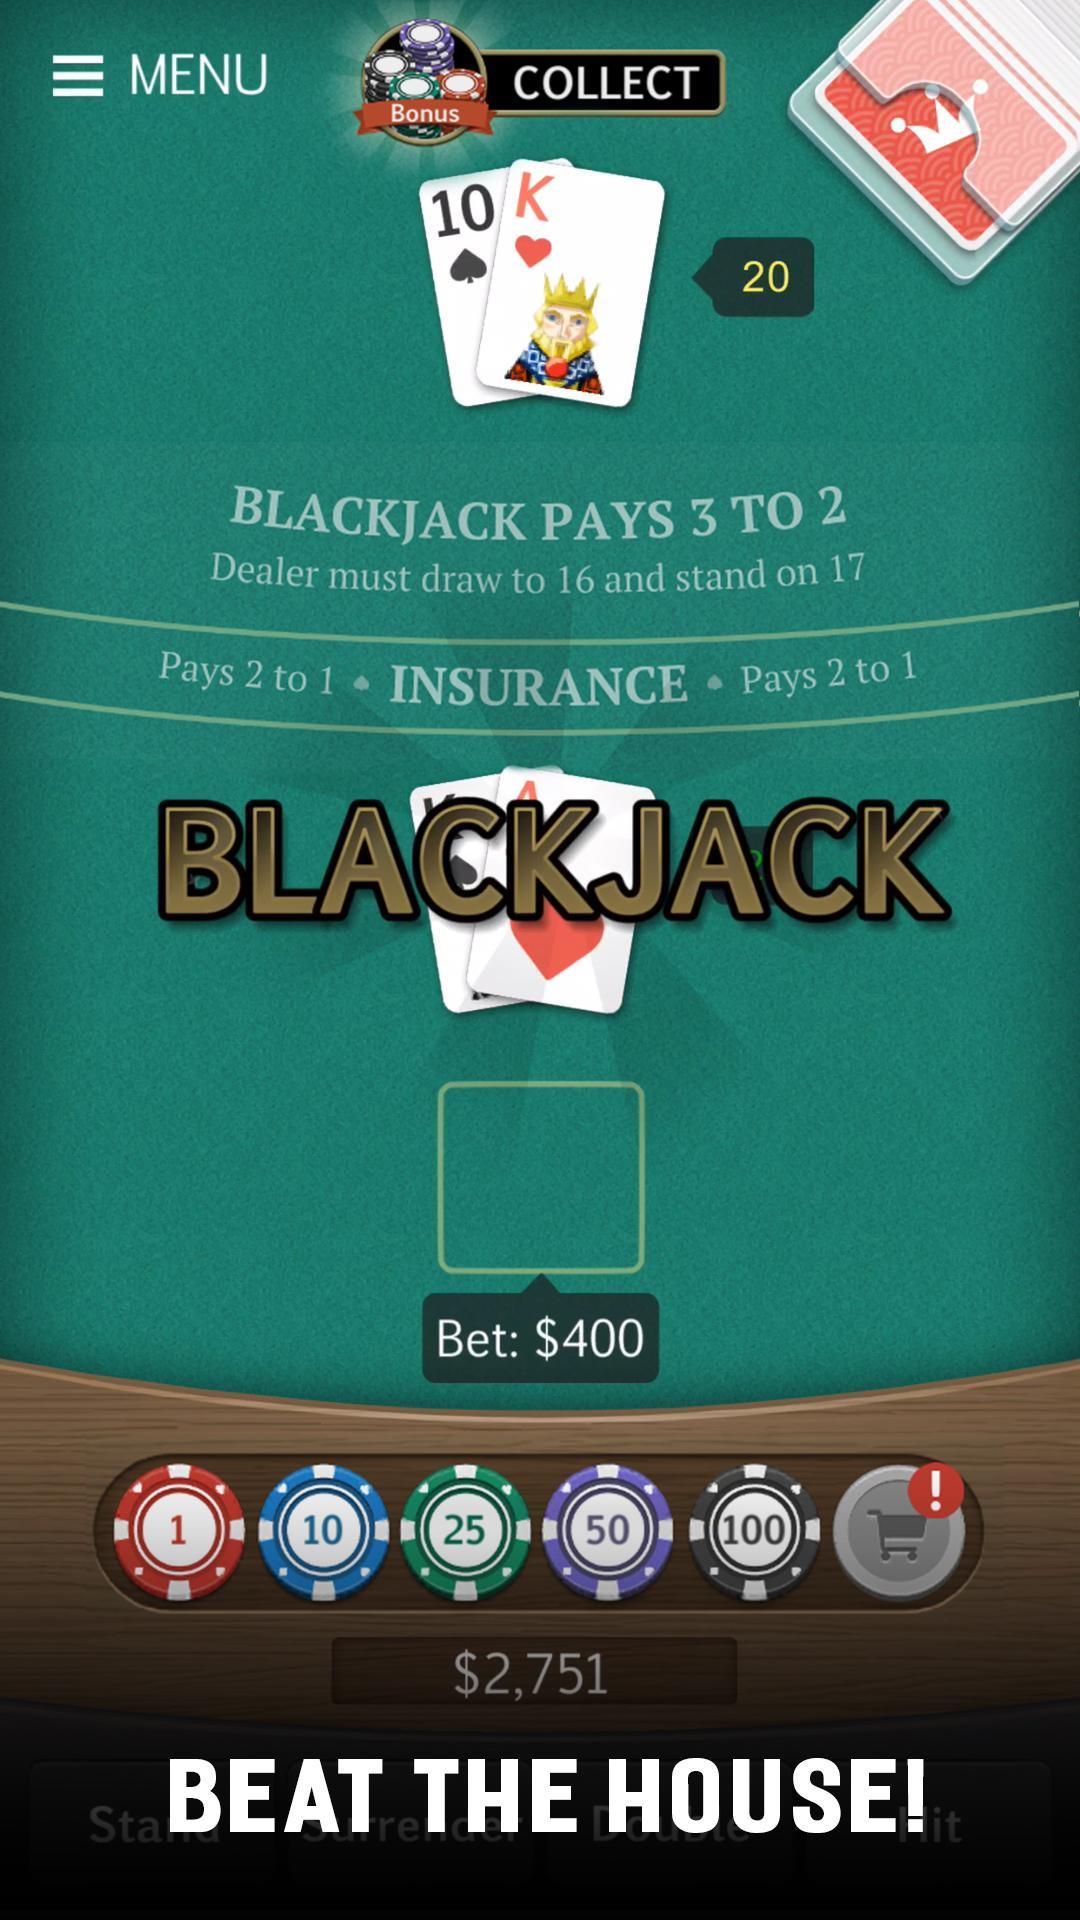 Blackjack For Android Apk Download - como conseguir robux gratis en juegos stand casino